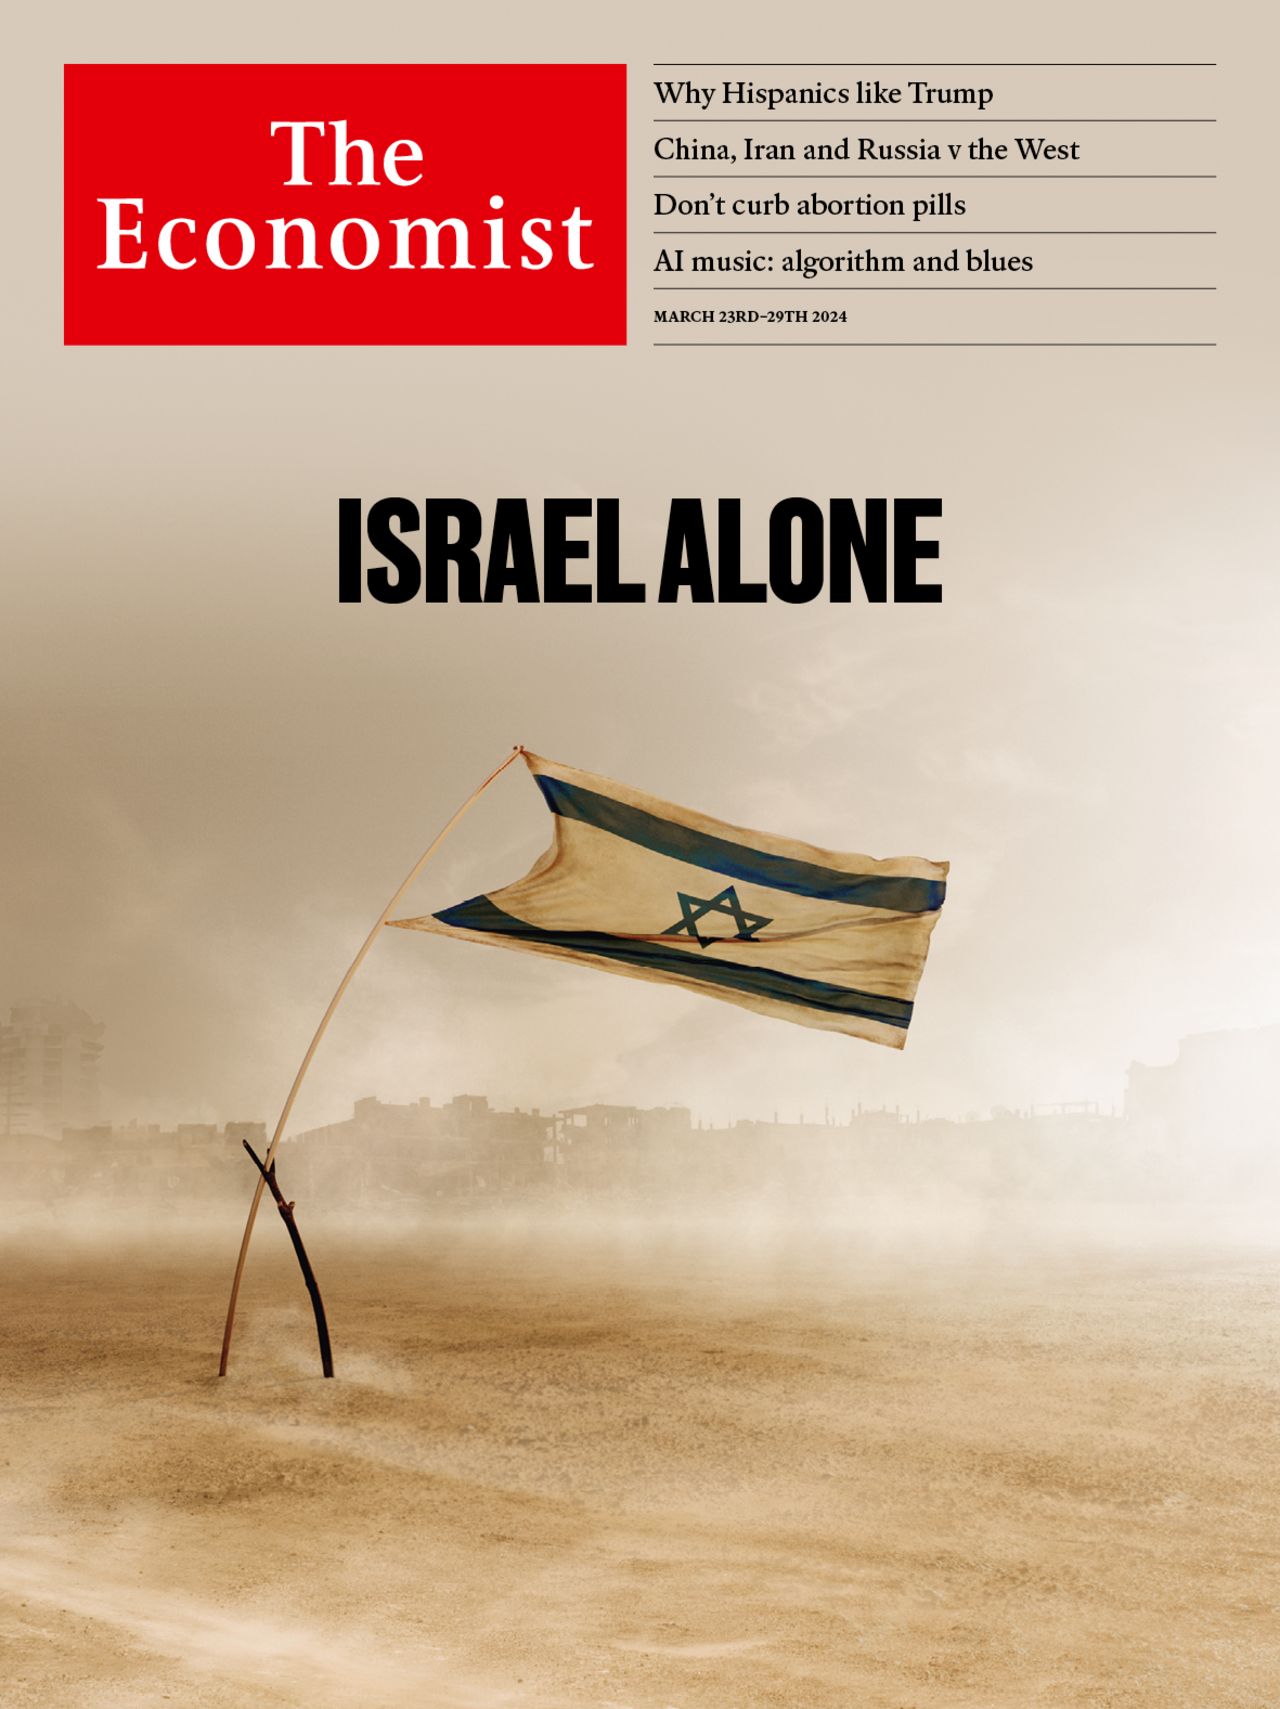 Israel alone